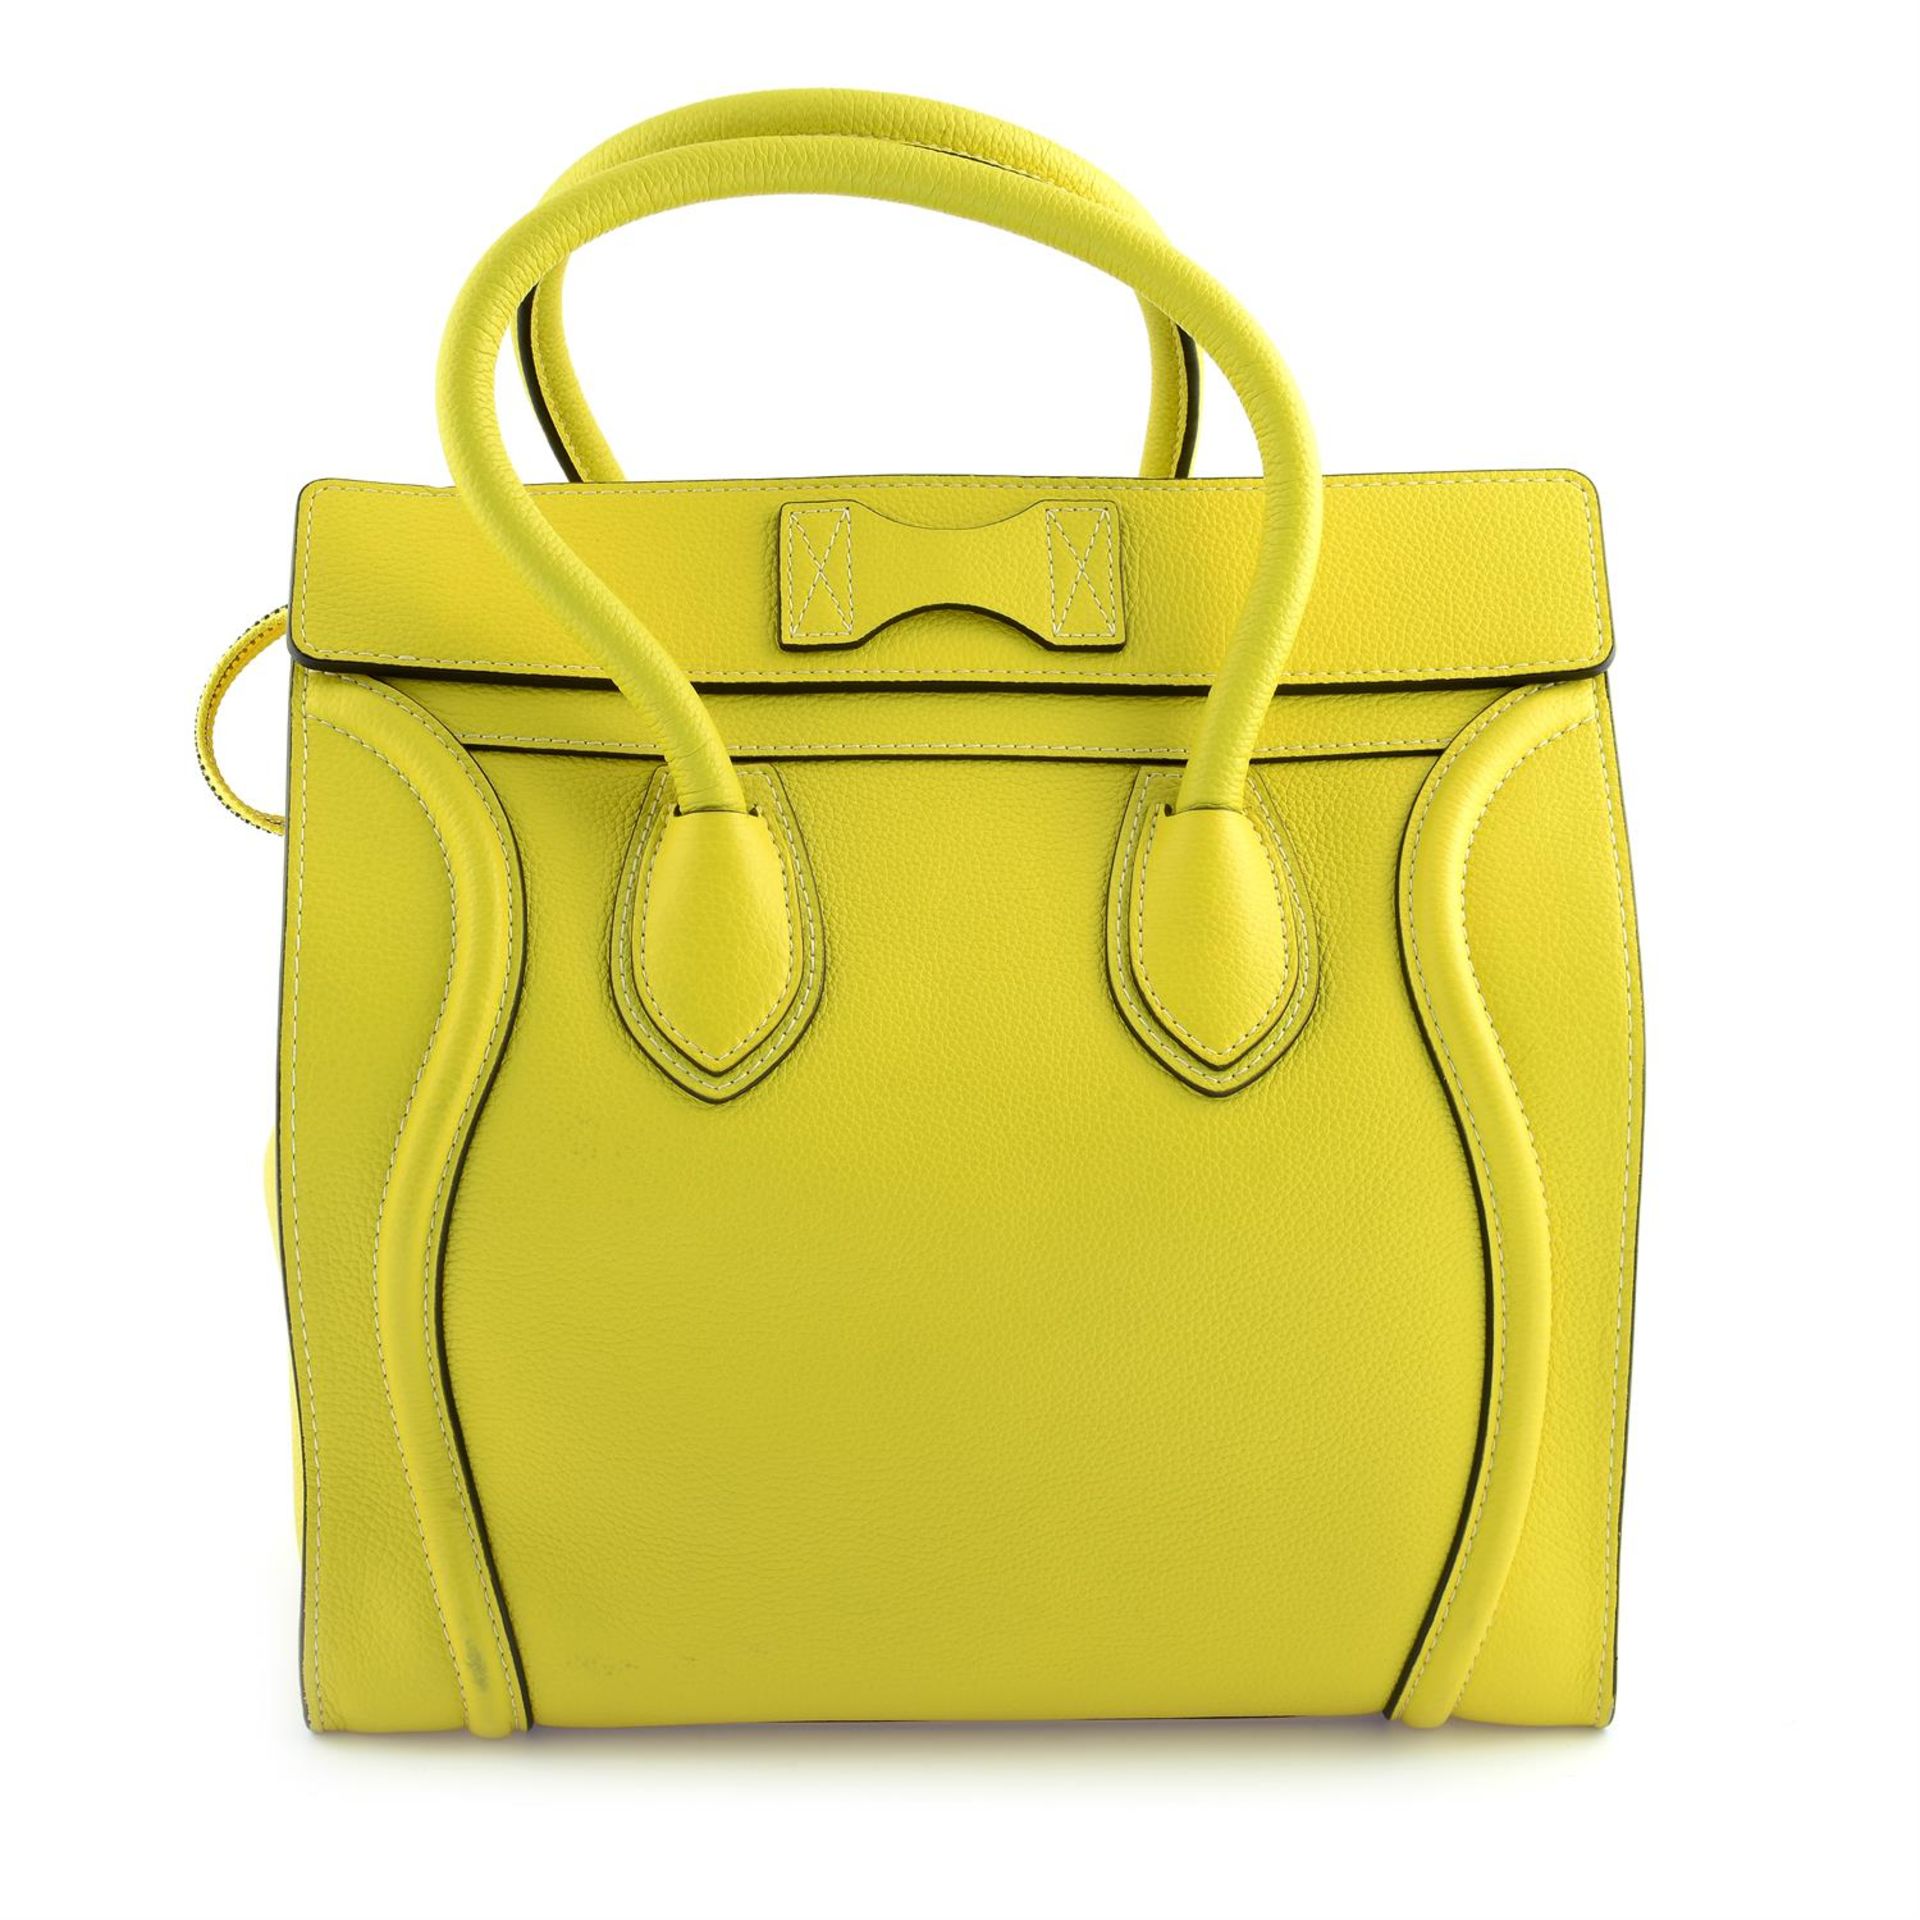 CÉLINE- a mustard yellow leather Phantom bag. - Image 2 of 5